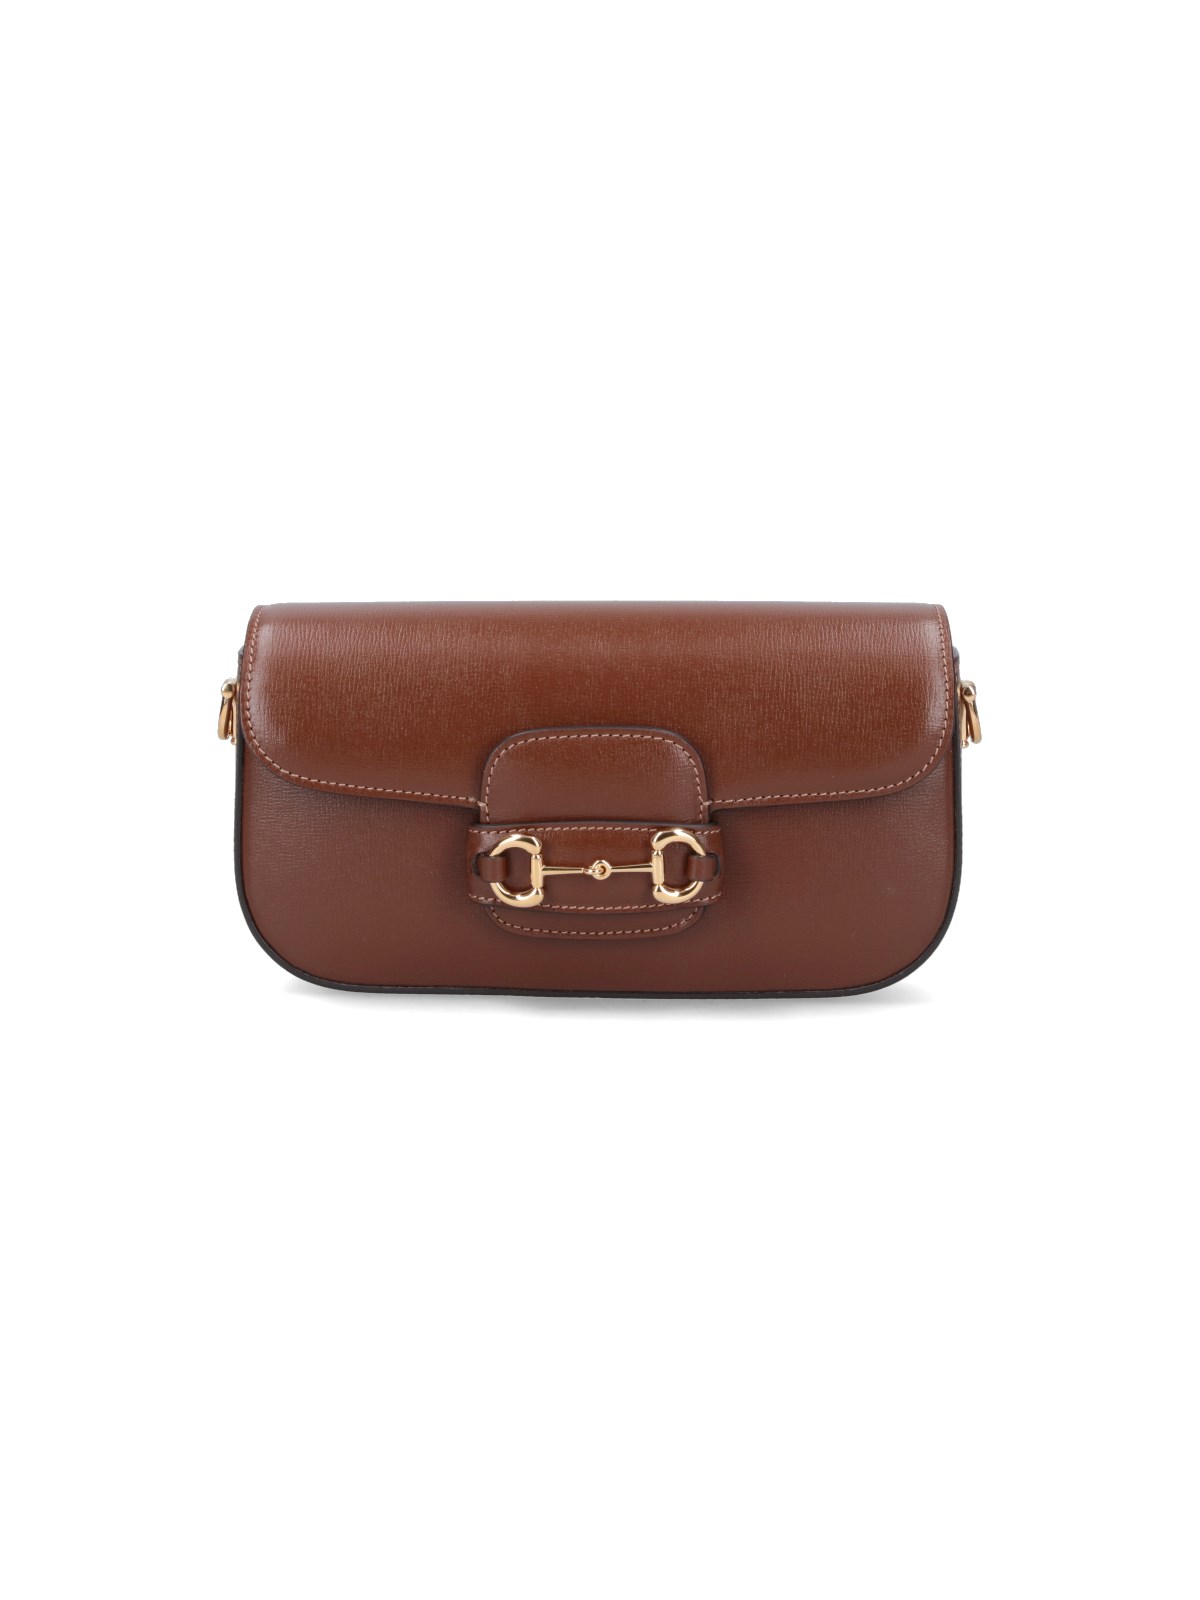 Gucci Horsebit 1955 Small Shoulder Bag In Brown